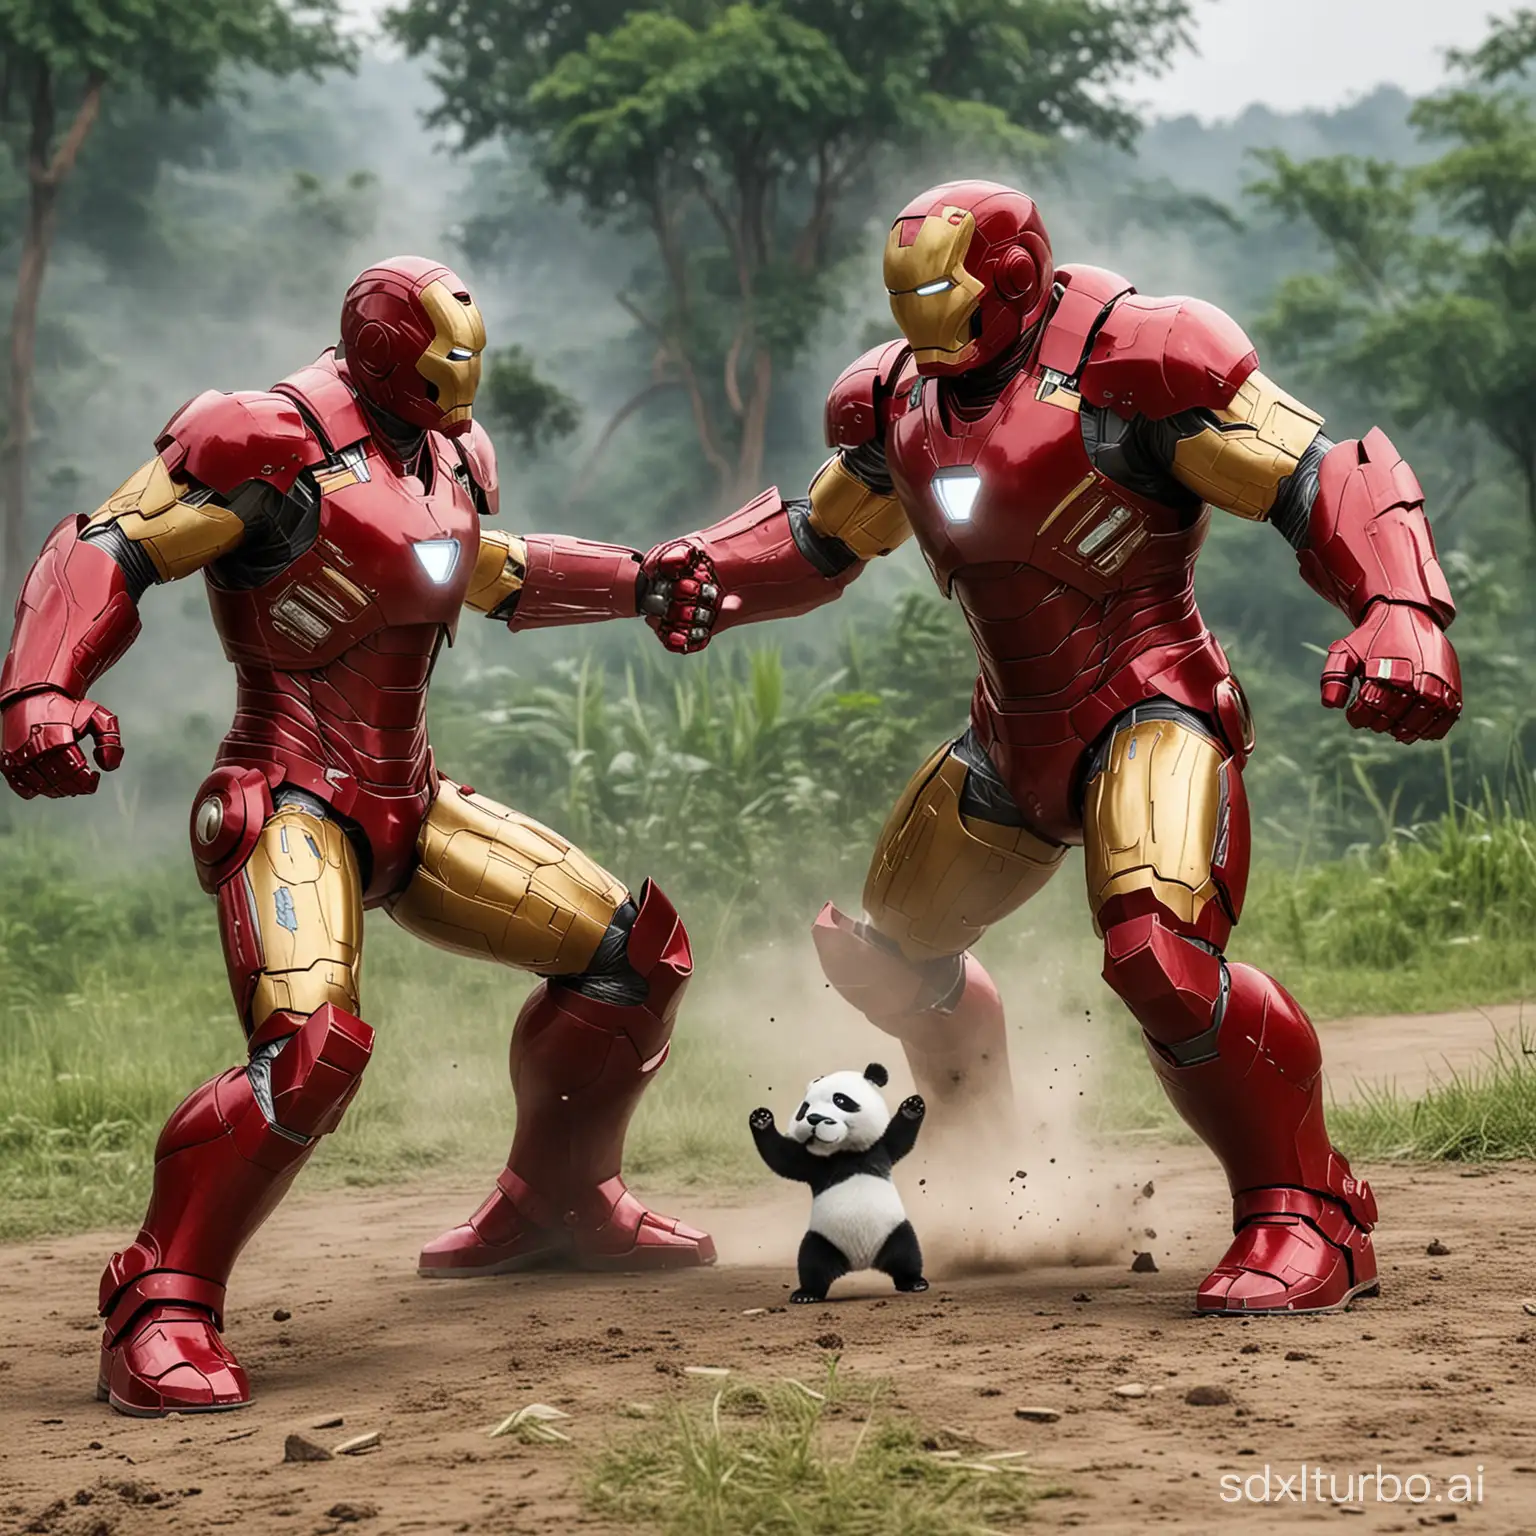 Iron-Man-Battling-Panda-Epic-Superhero-Confrontation-in-Urban-Jungle